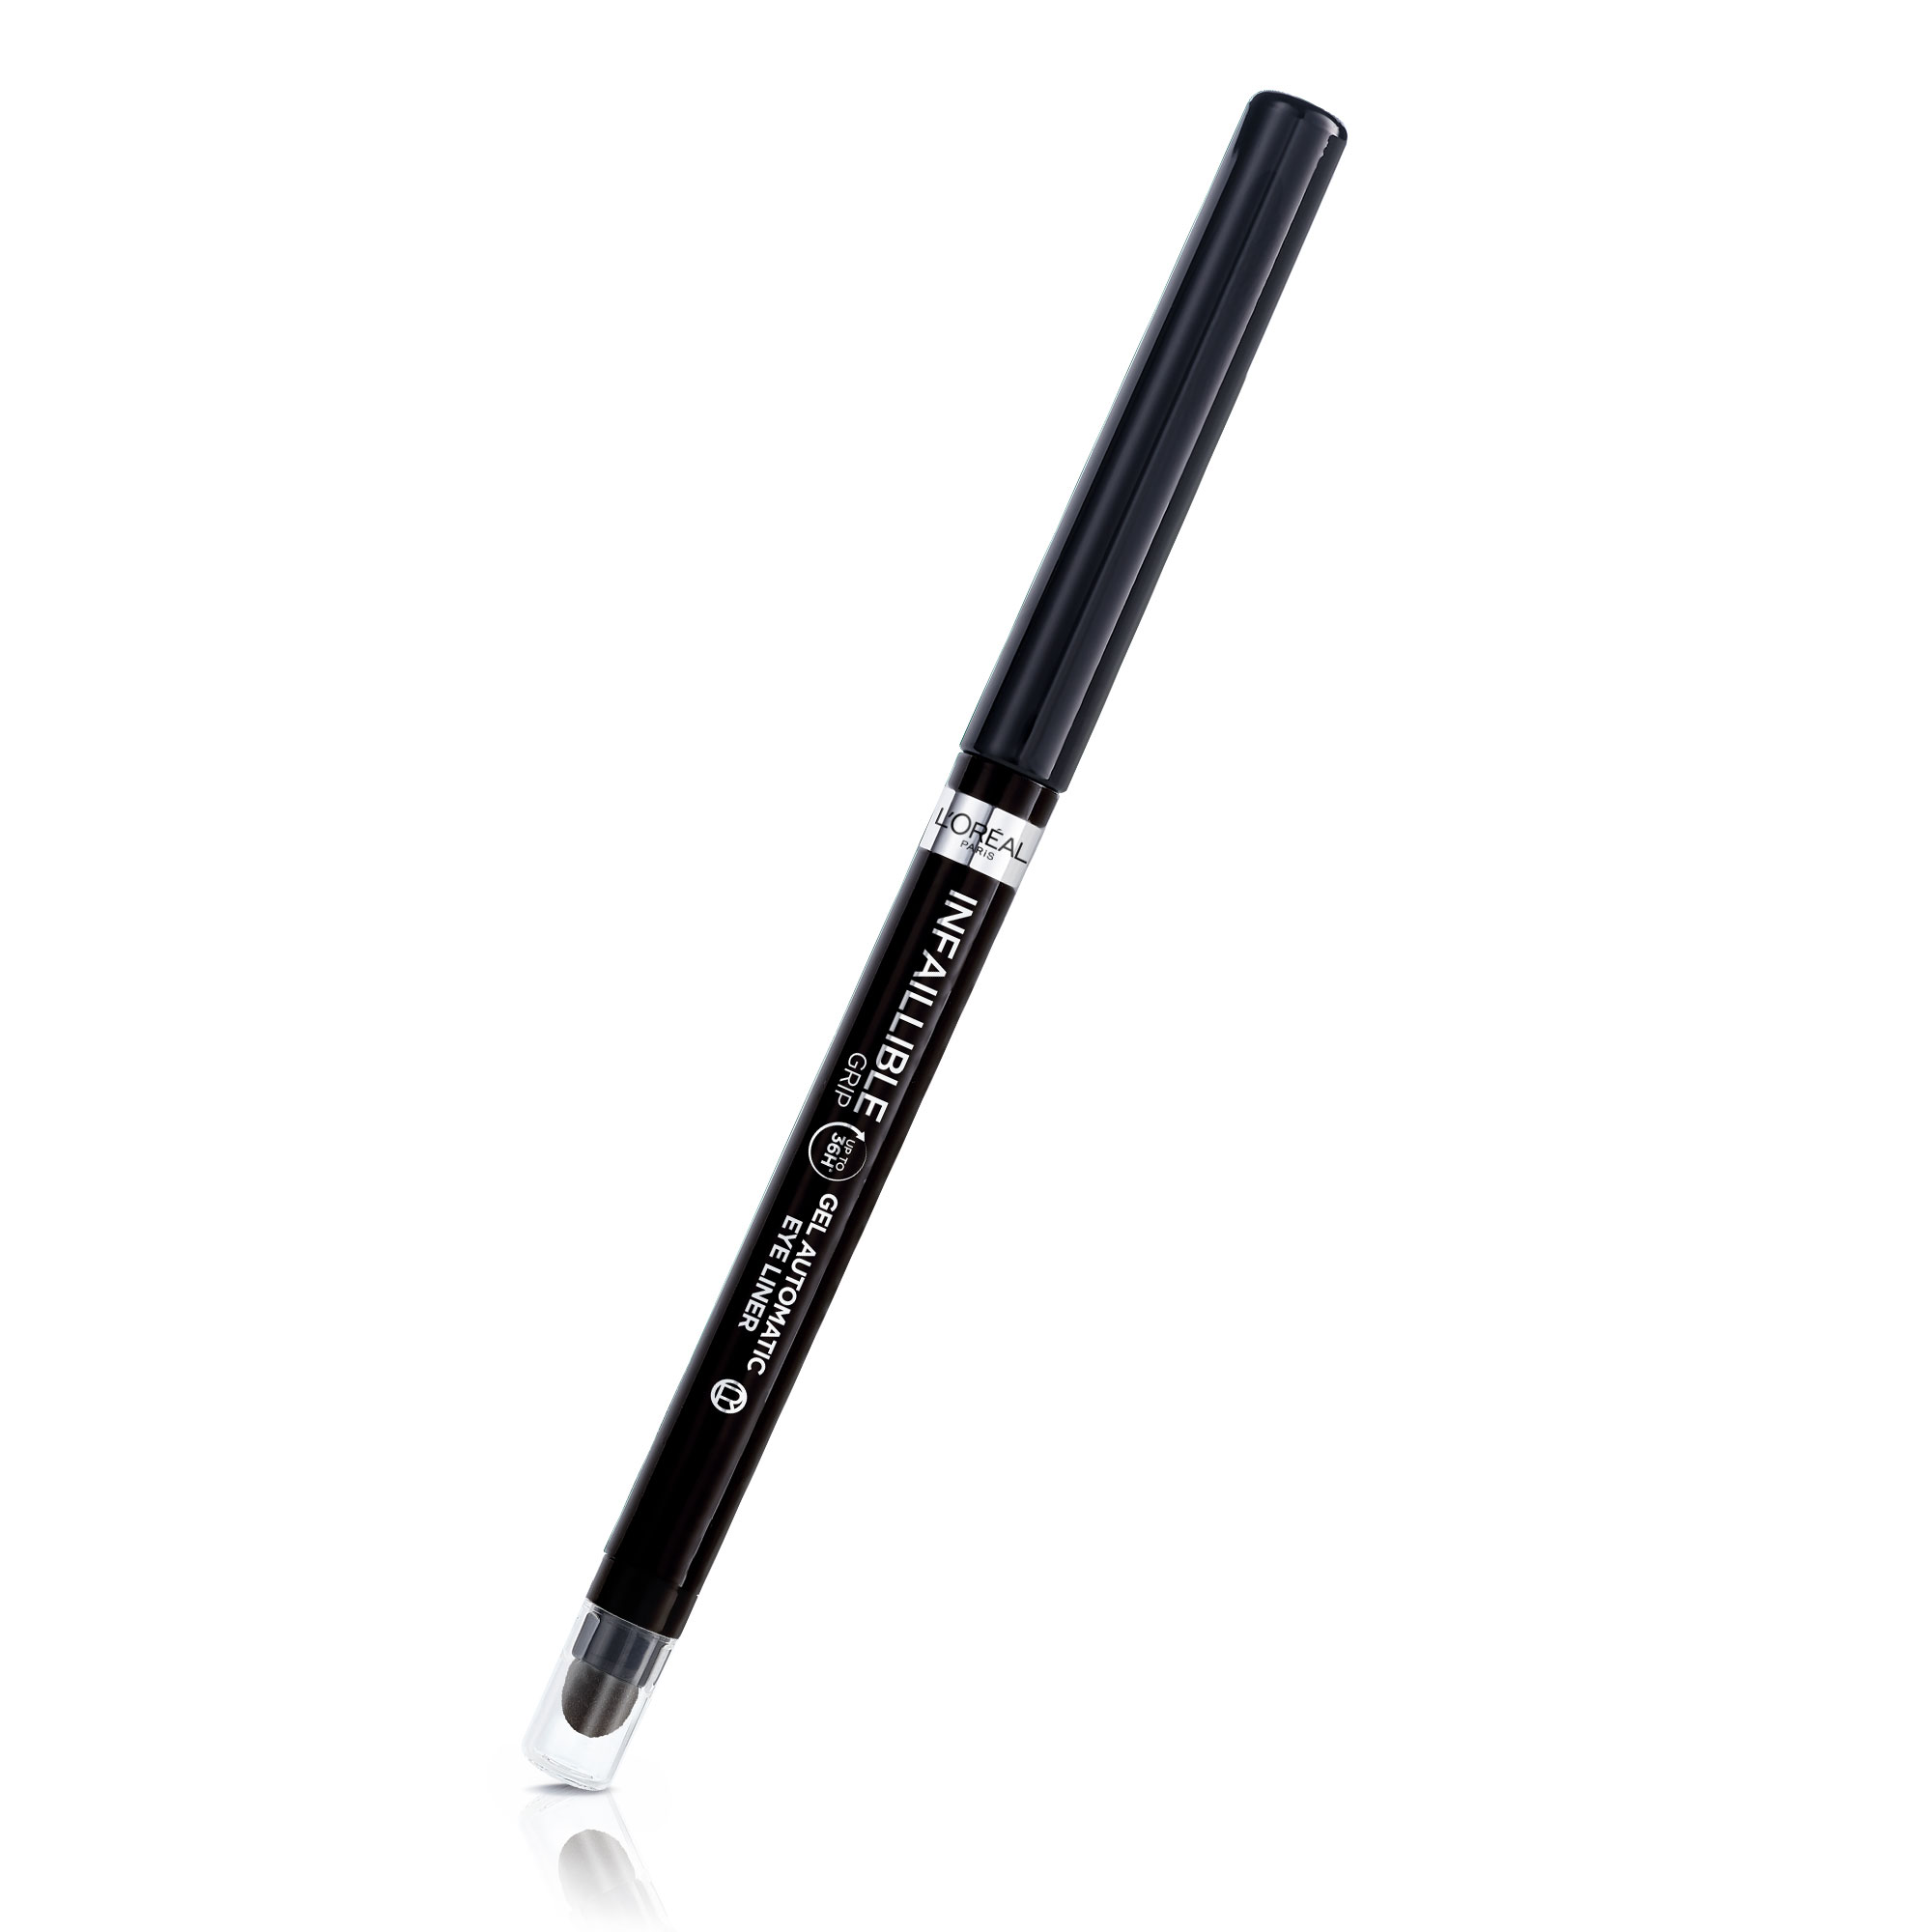 Creion mecanic pentru ochi tip gel Infaillible 36H Grip, Intense Black, 1.2 g, Loreal Paris